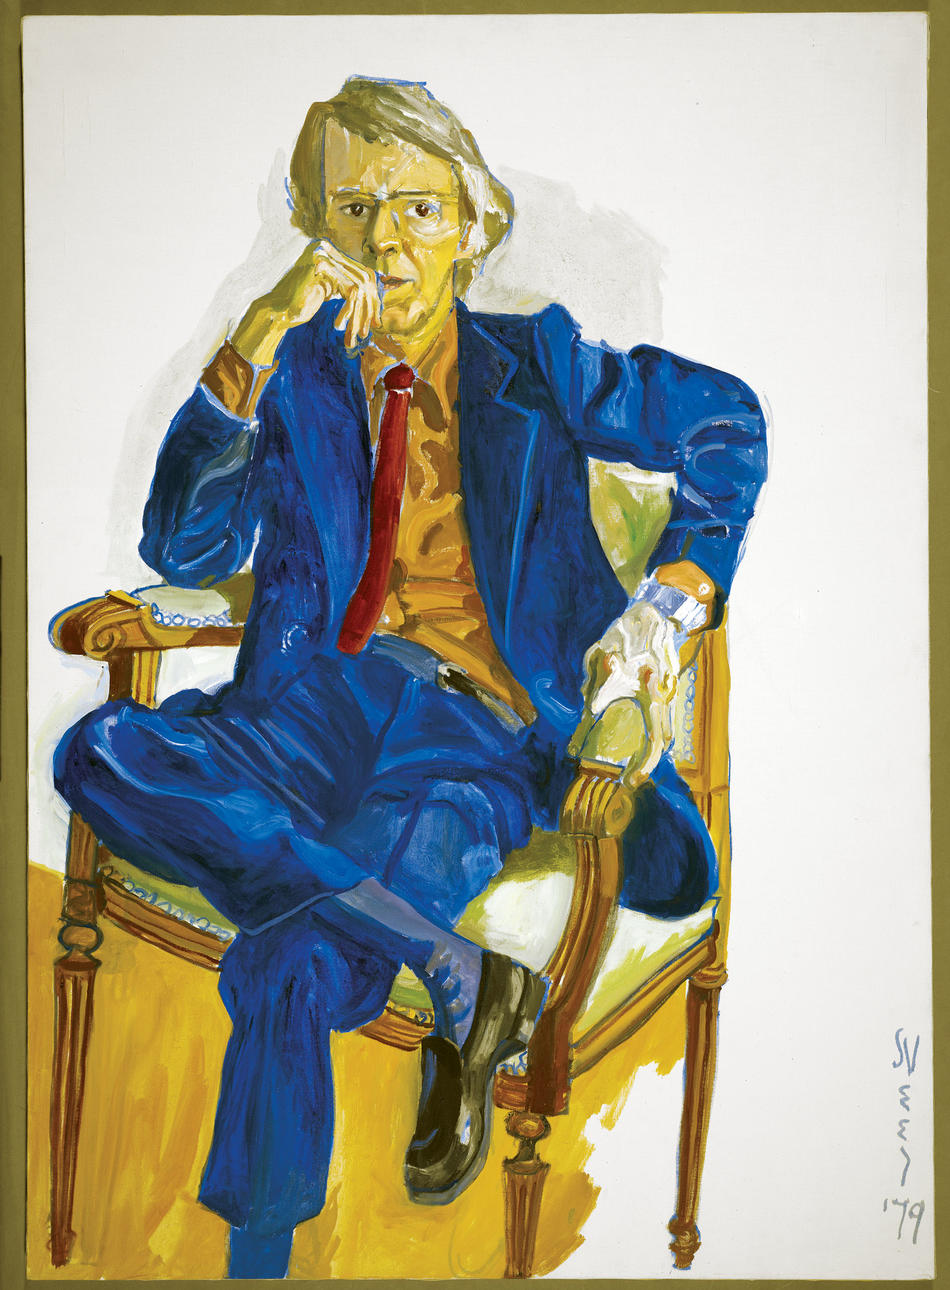 Alice Neel's 1979 portrait of Jack Beeson